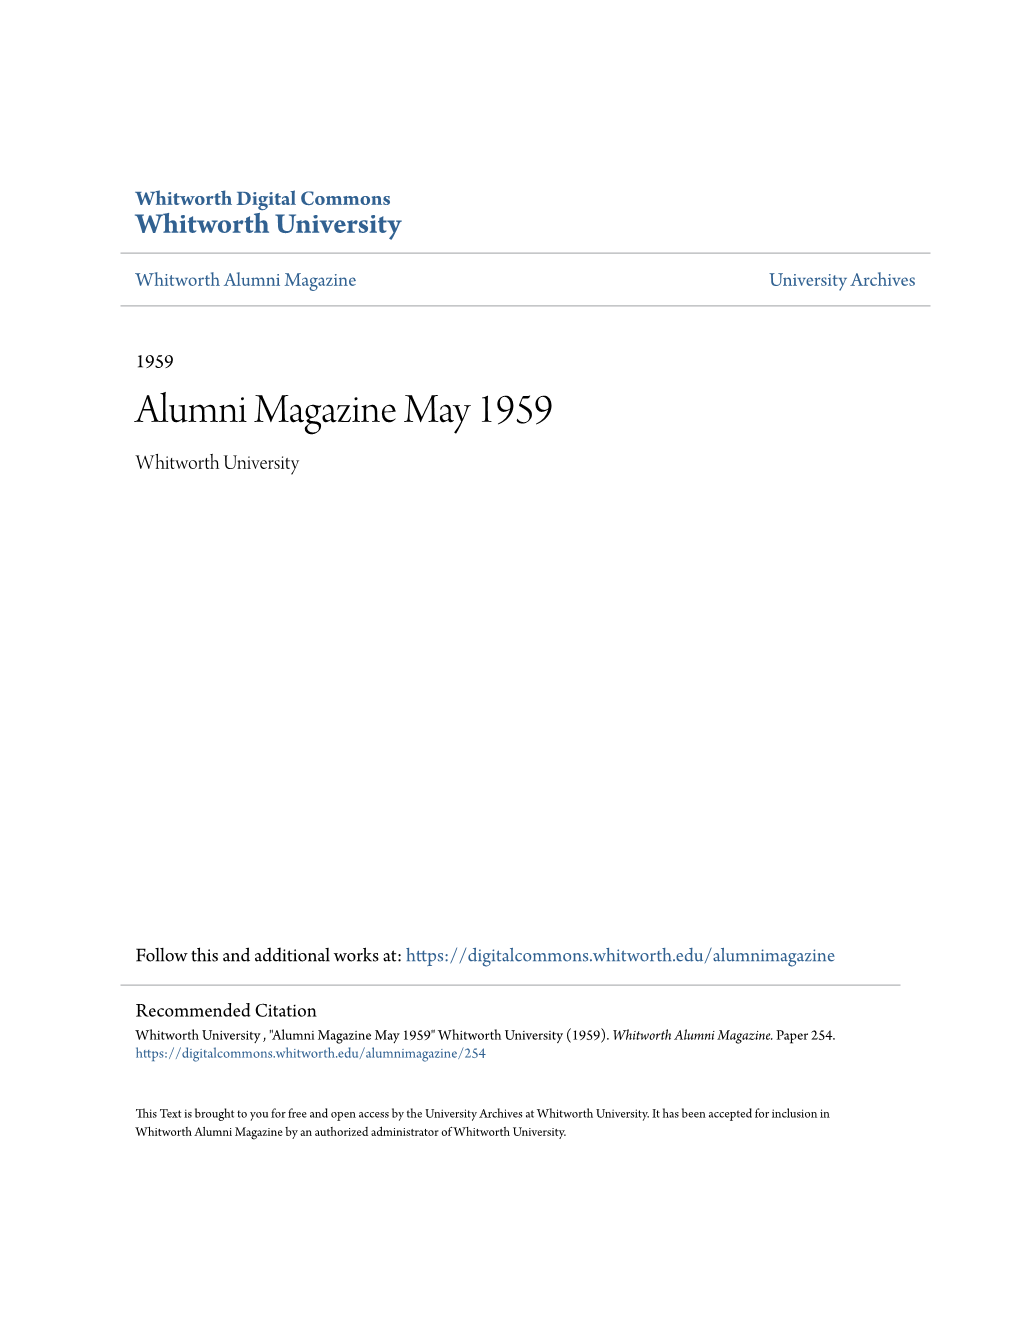 Alumni Magazine May 1959 Whitworth University